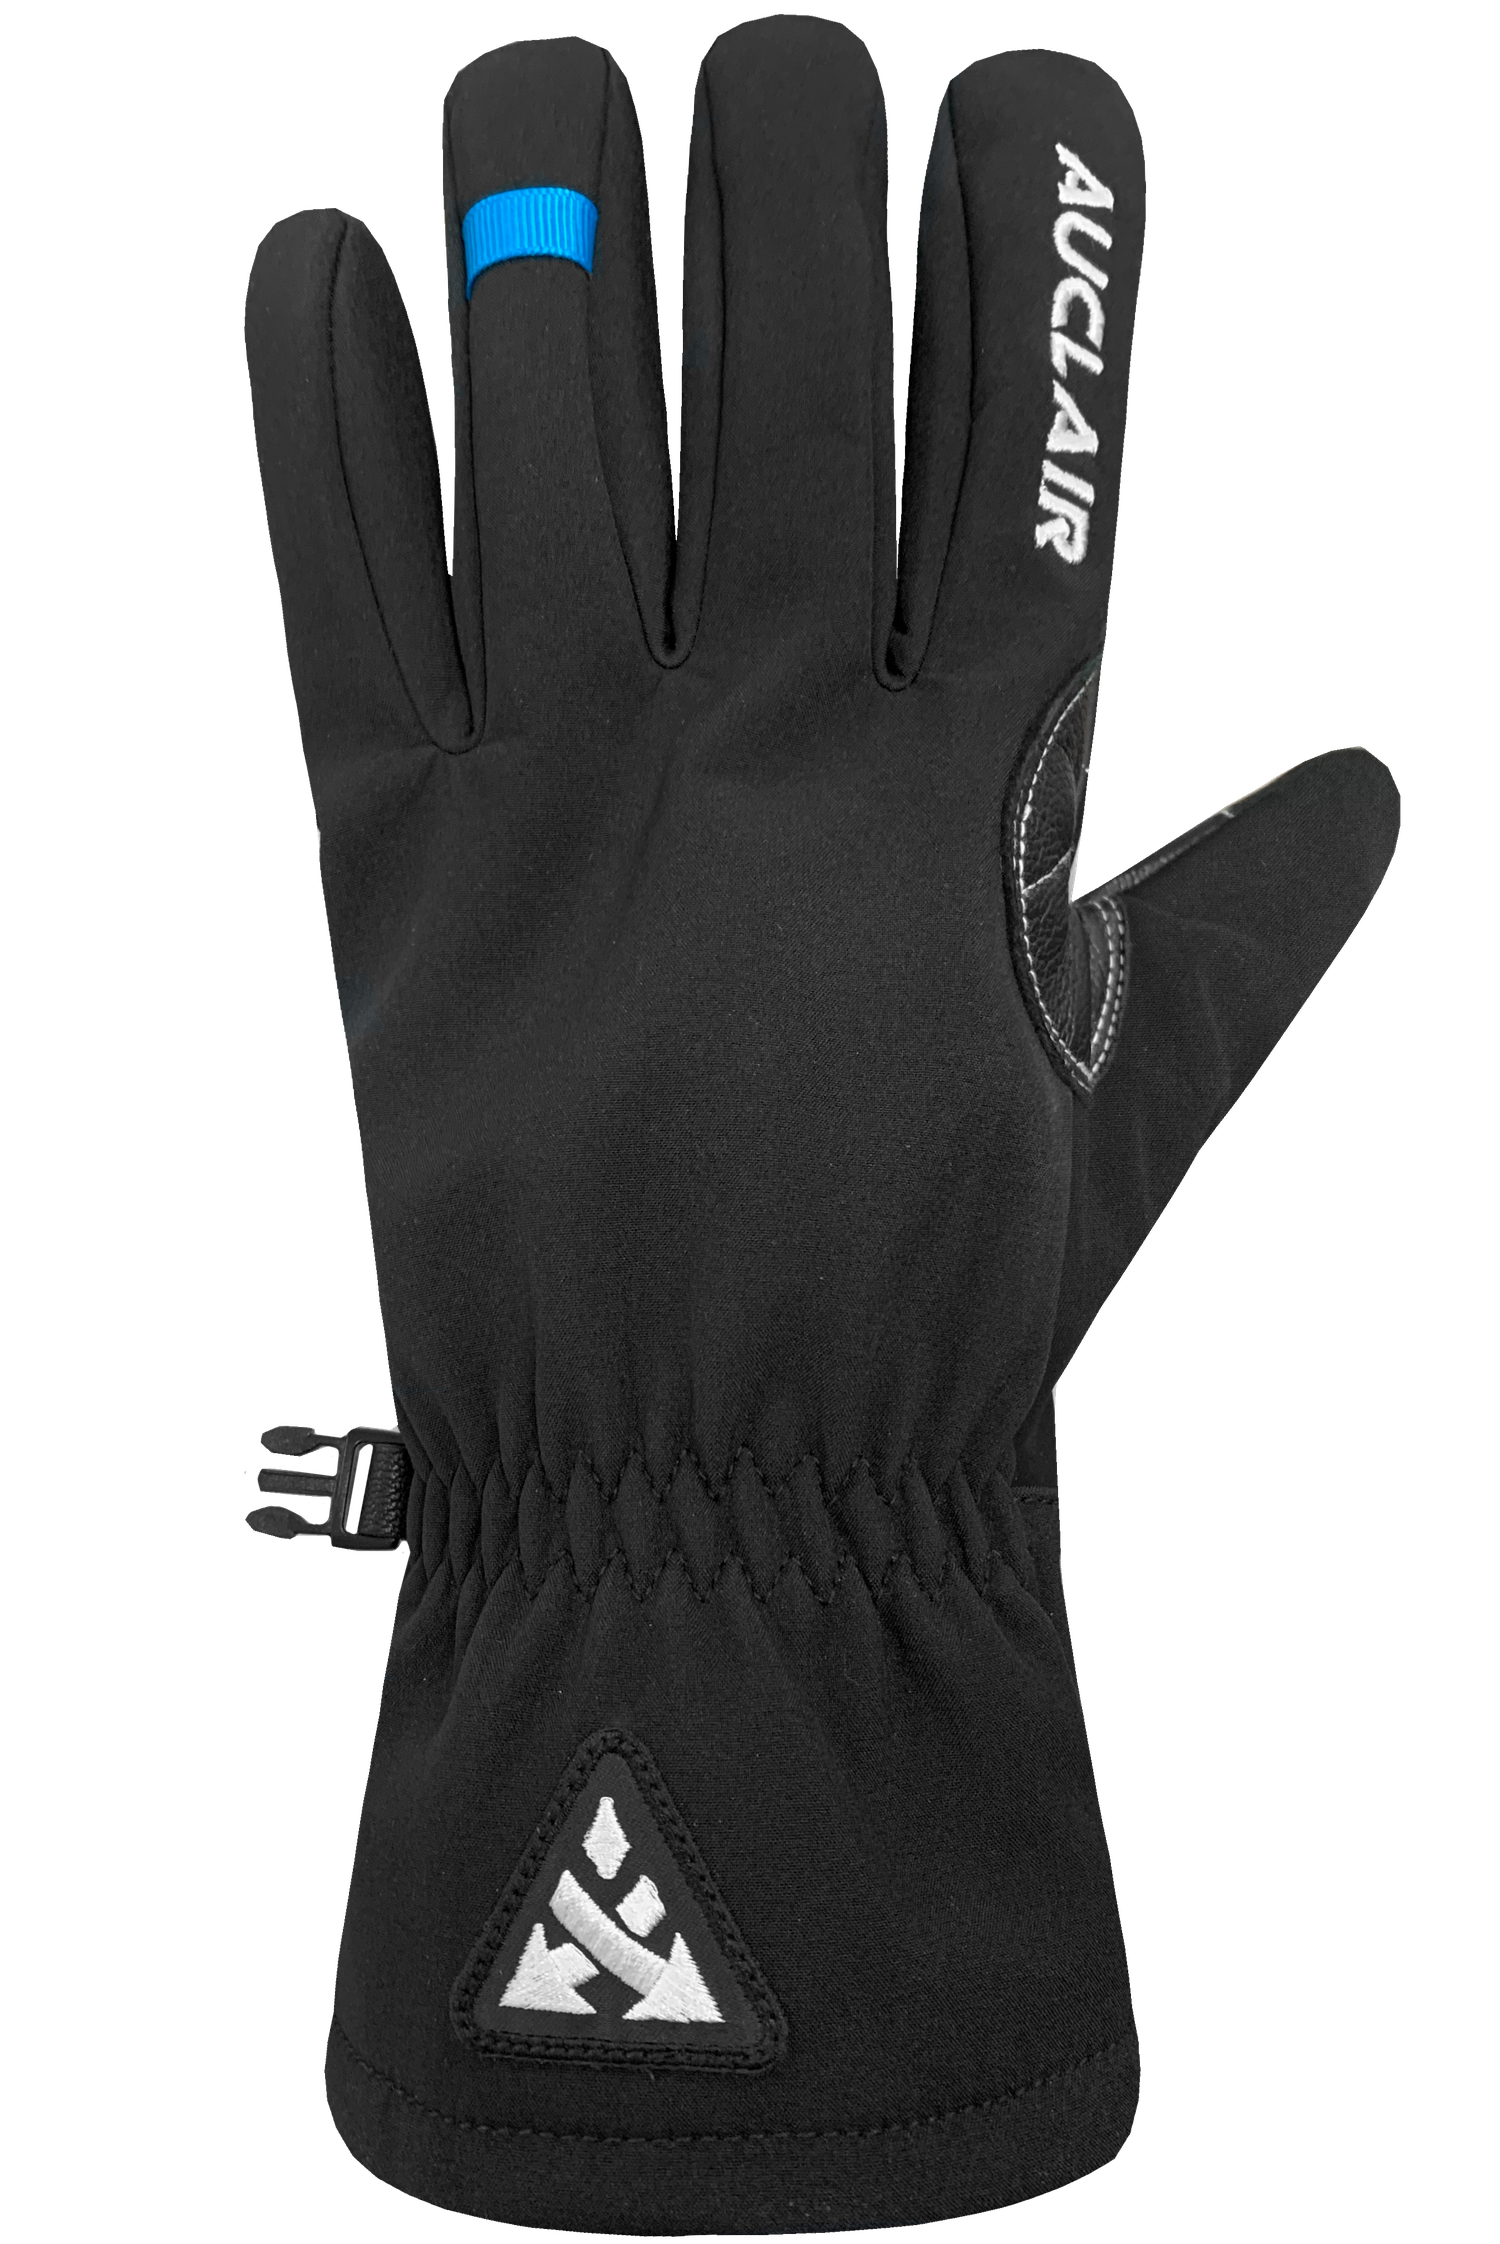 Blizzard Gloves - Adult, Black